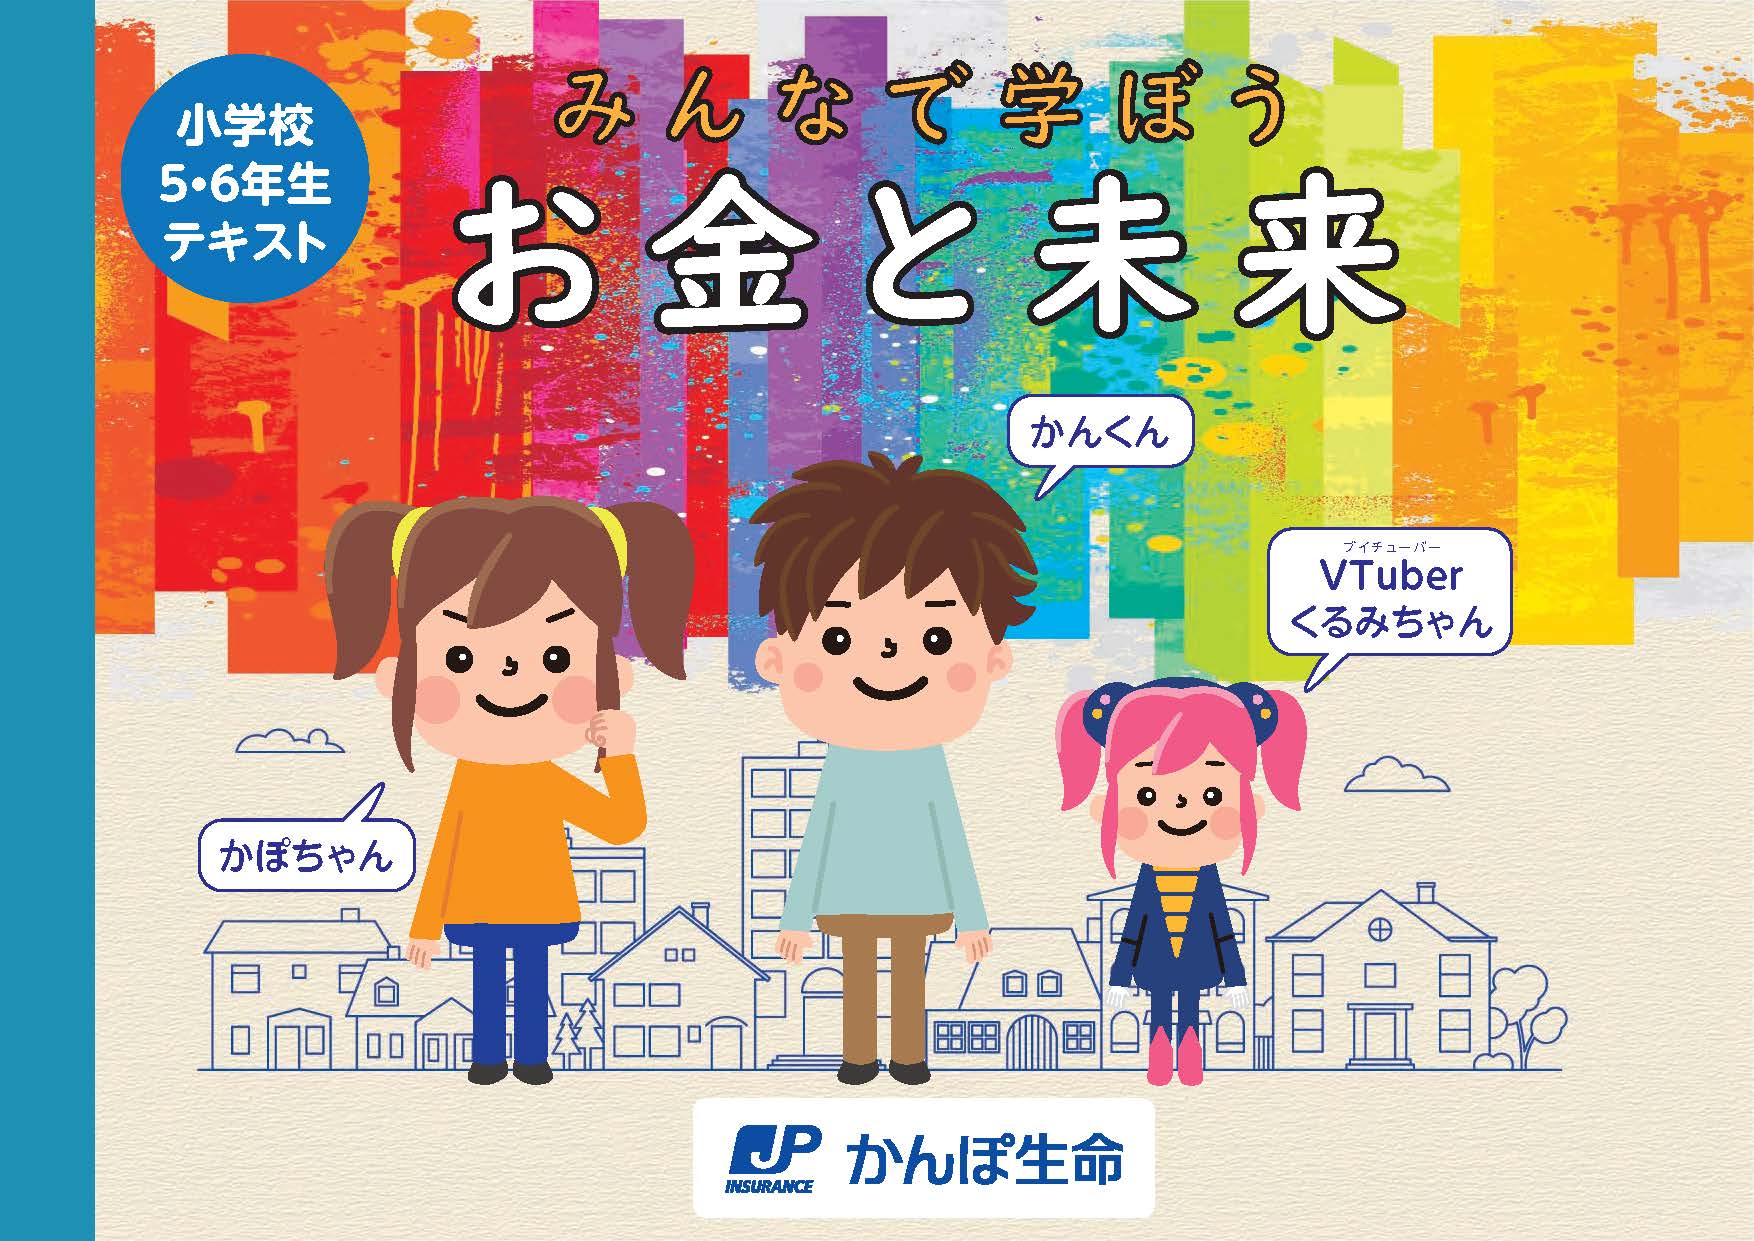 Japan Post Insurance original teaching material "Money and the Future"